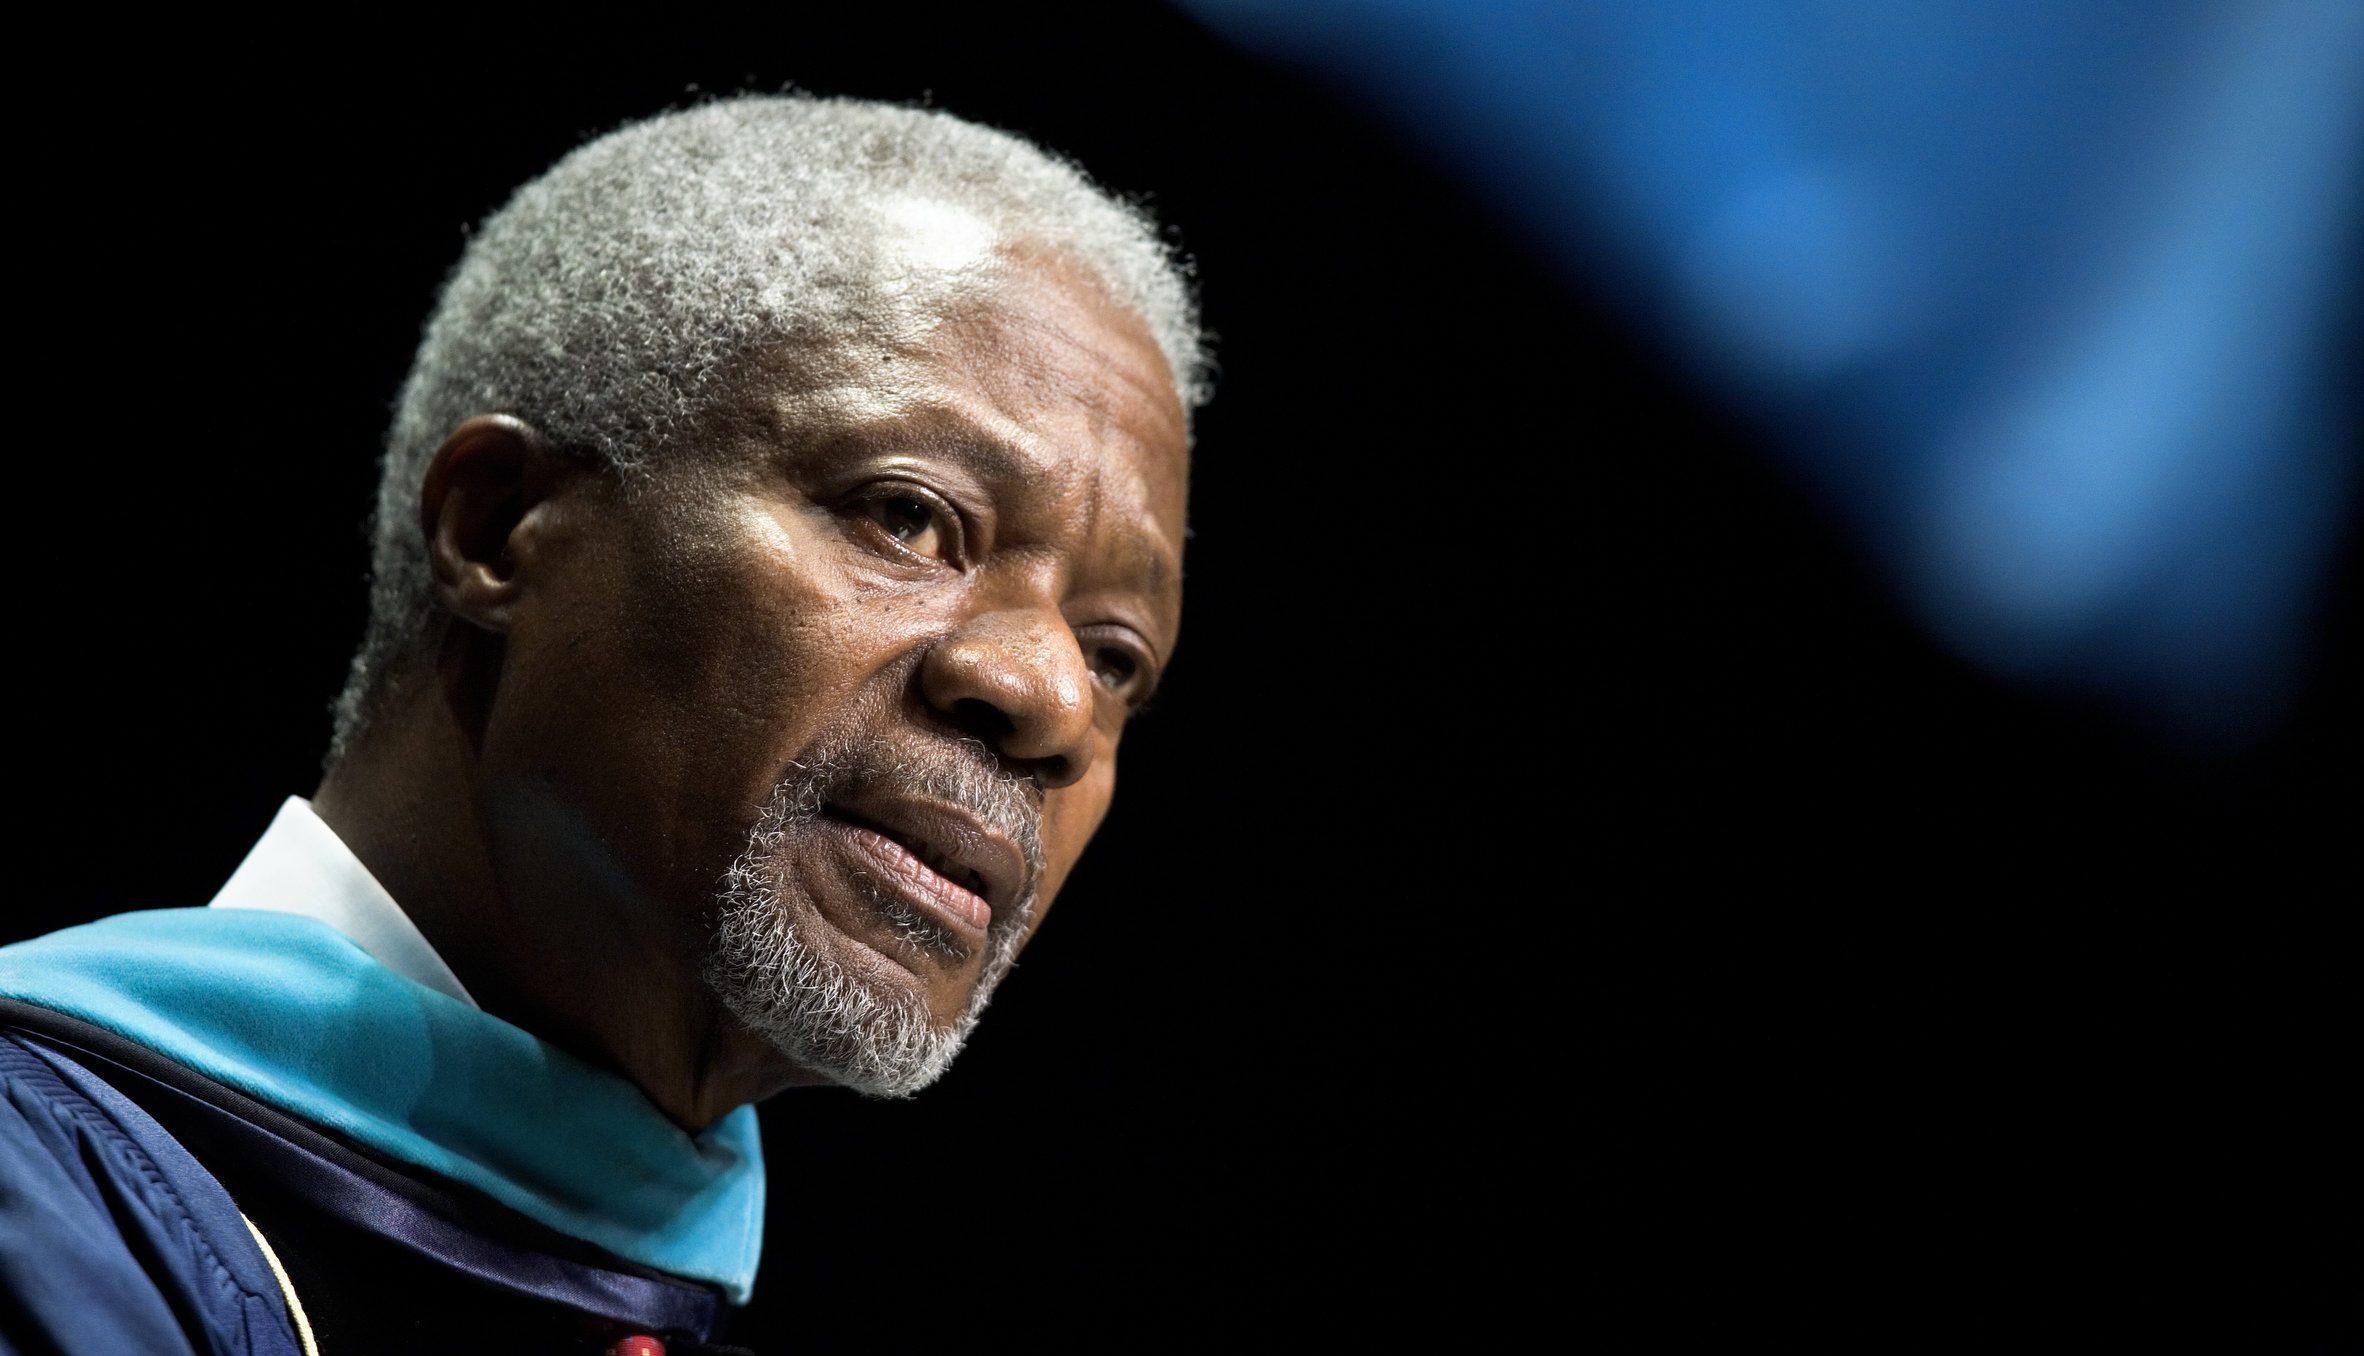 Muere Kofi Annan, el ex secretario general de la ONU llamado la estrella de la diplomacia